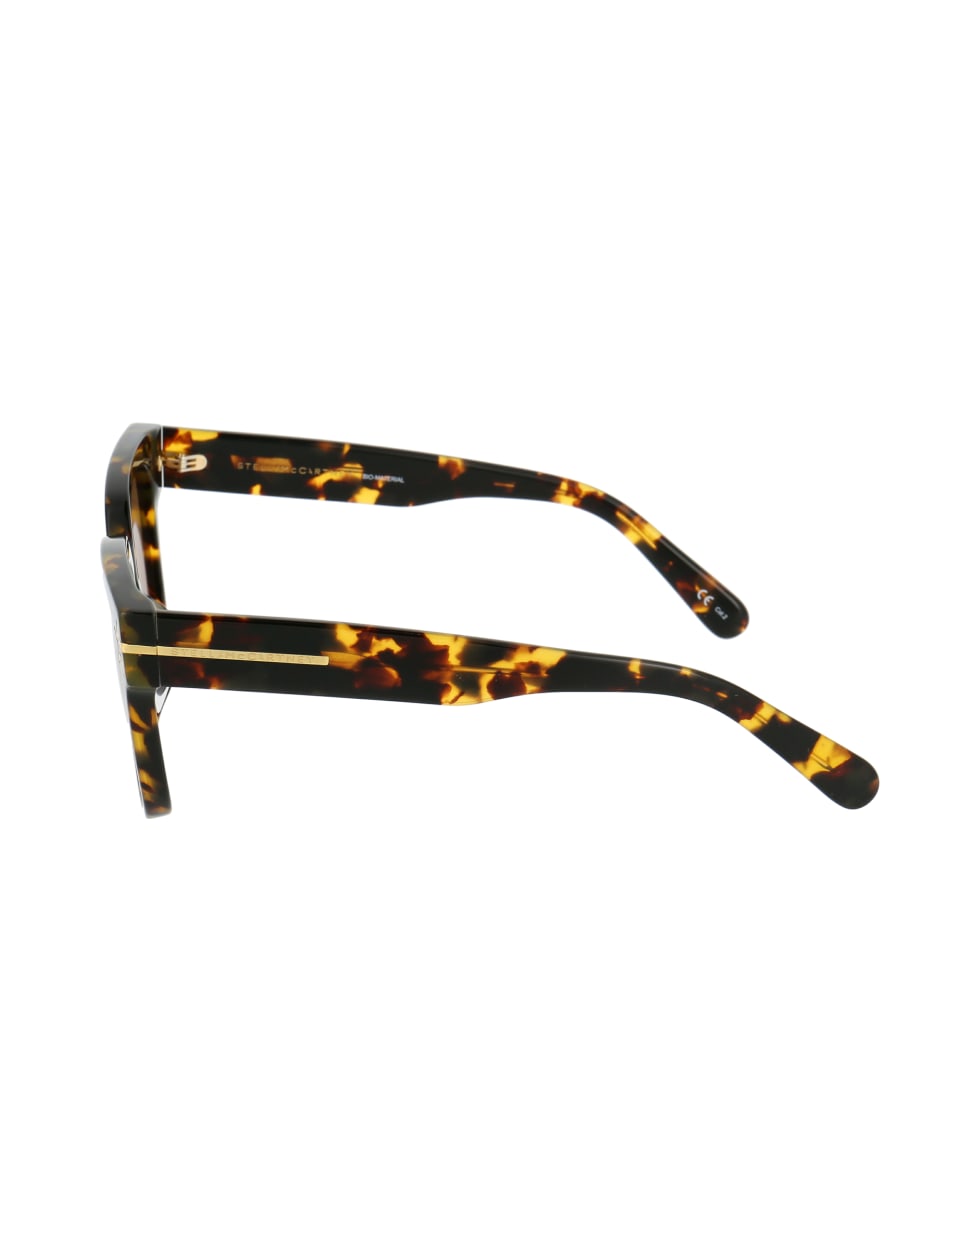 Stella McCartney Eyewear Sc0239s Sunglasses - 002 HAVANA HAVANA GREEN